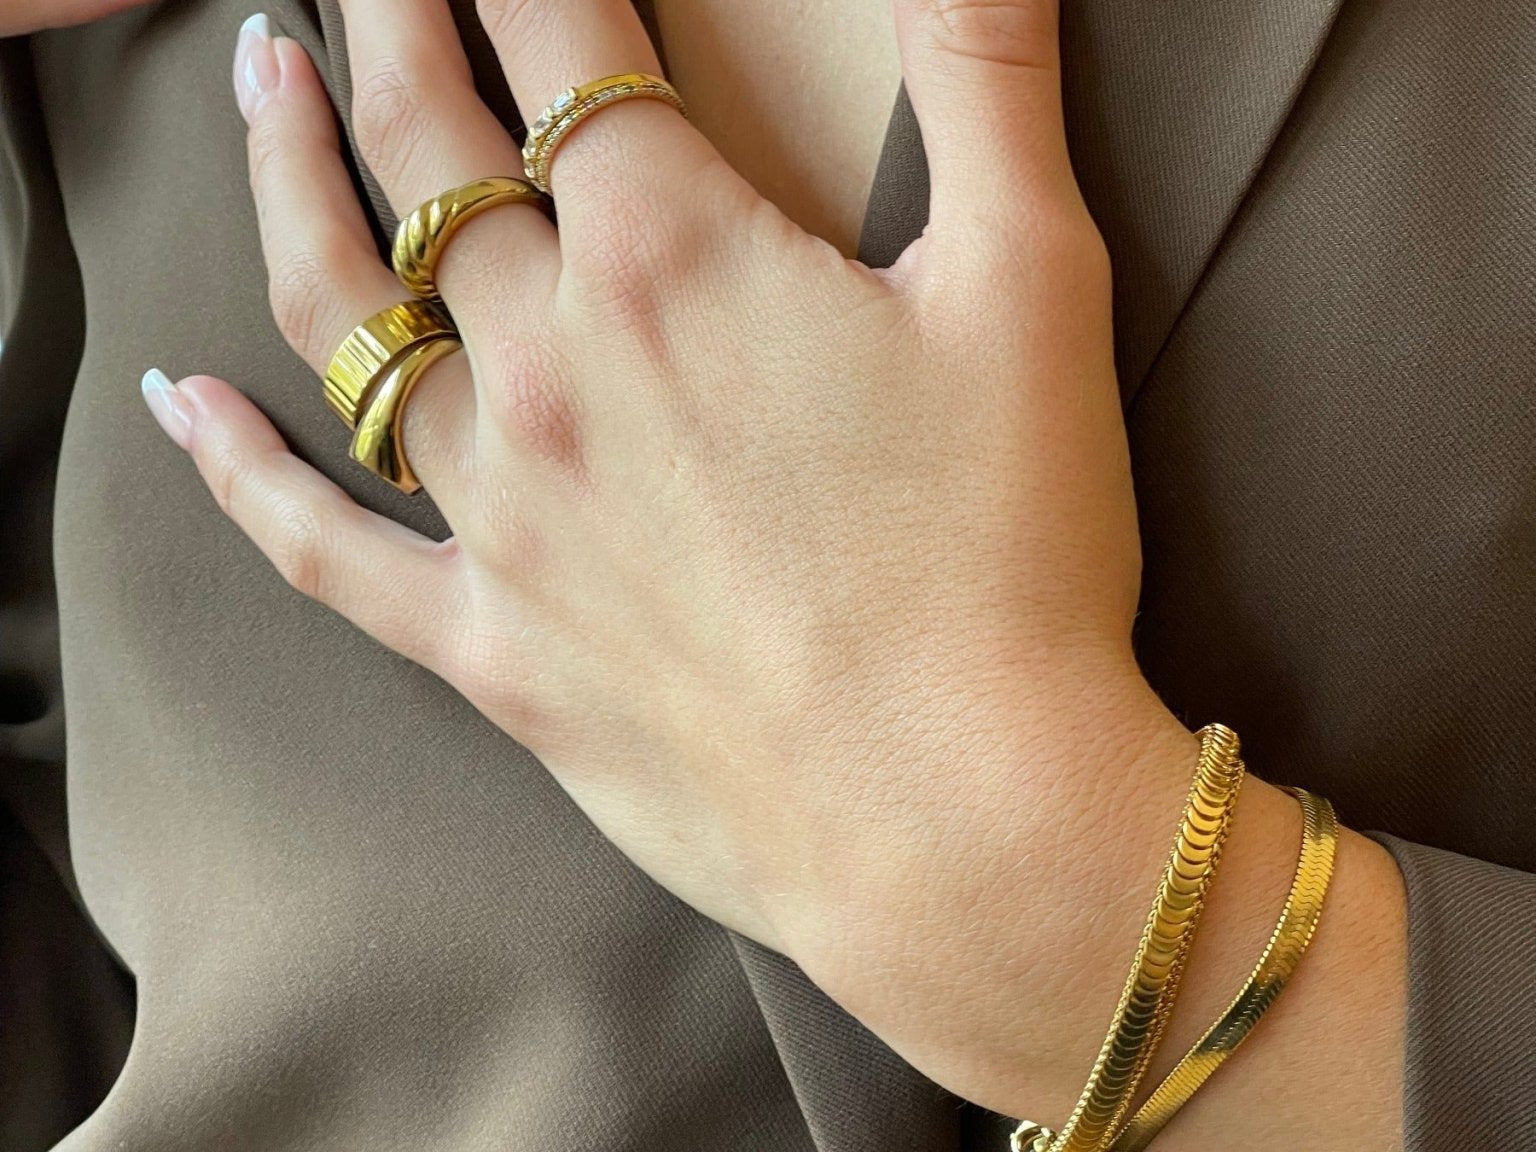 Cynthia Serpentine Gold Bracelet by Koréil Jewelry